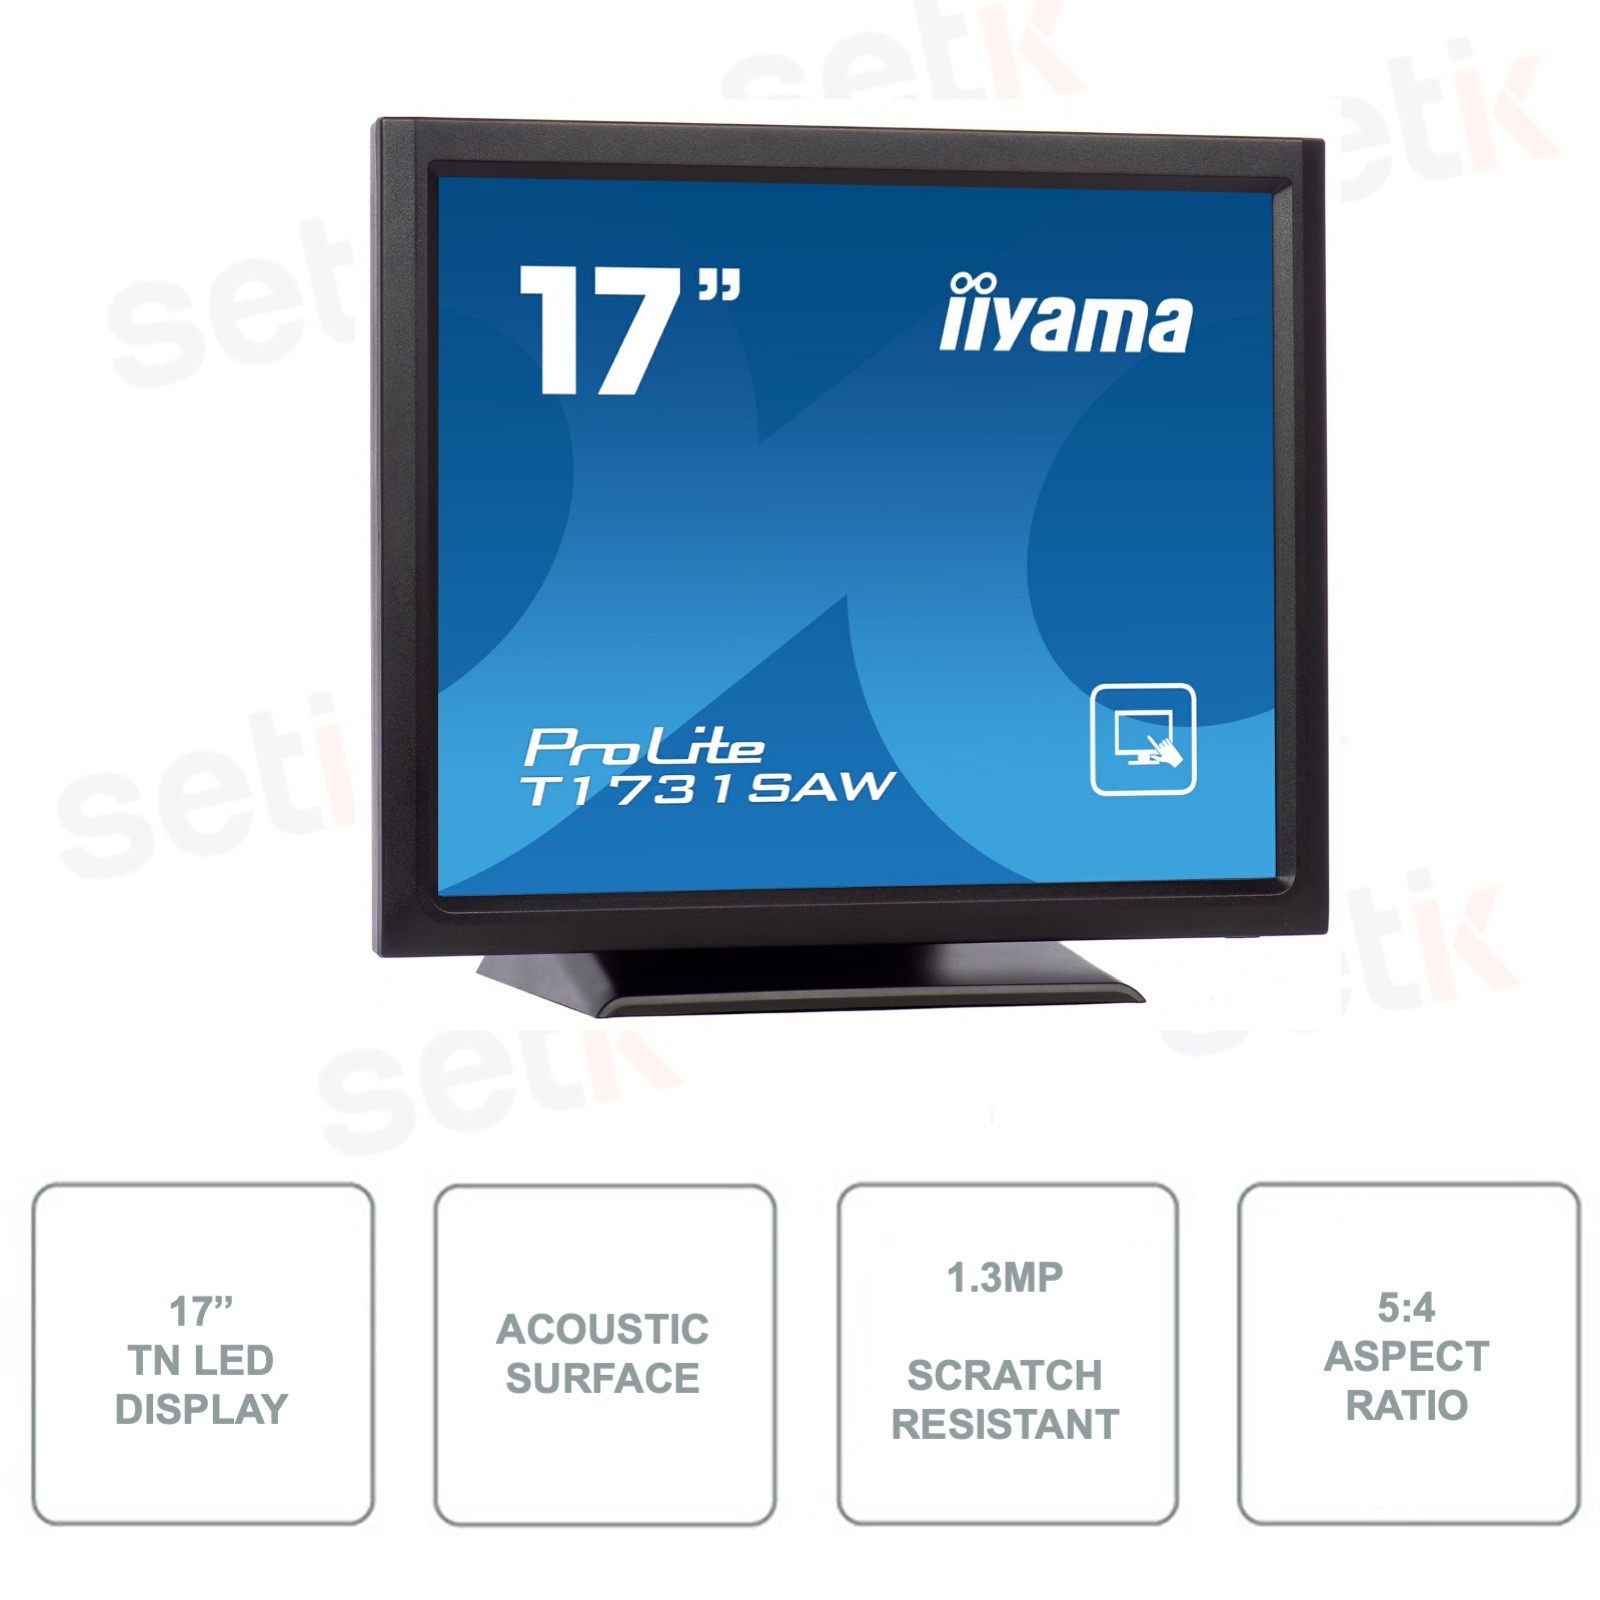 17 iiyama ProLite T1731SAW Touchscreen Black - LCD Monitor